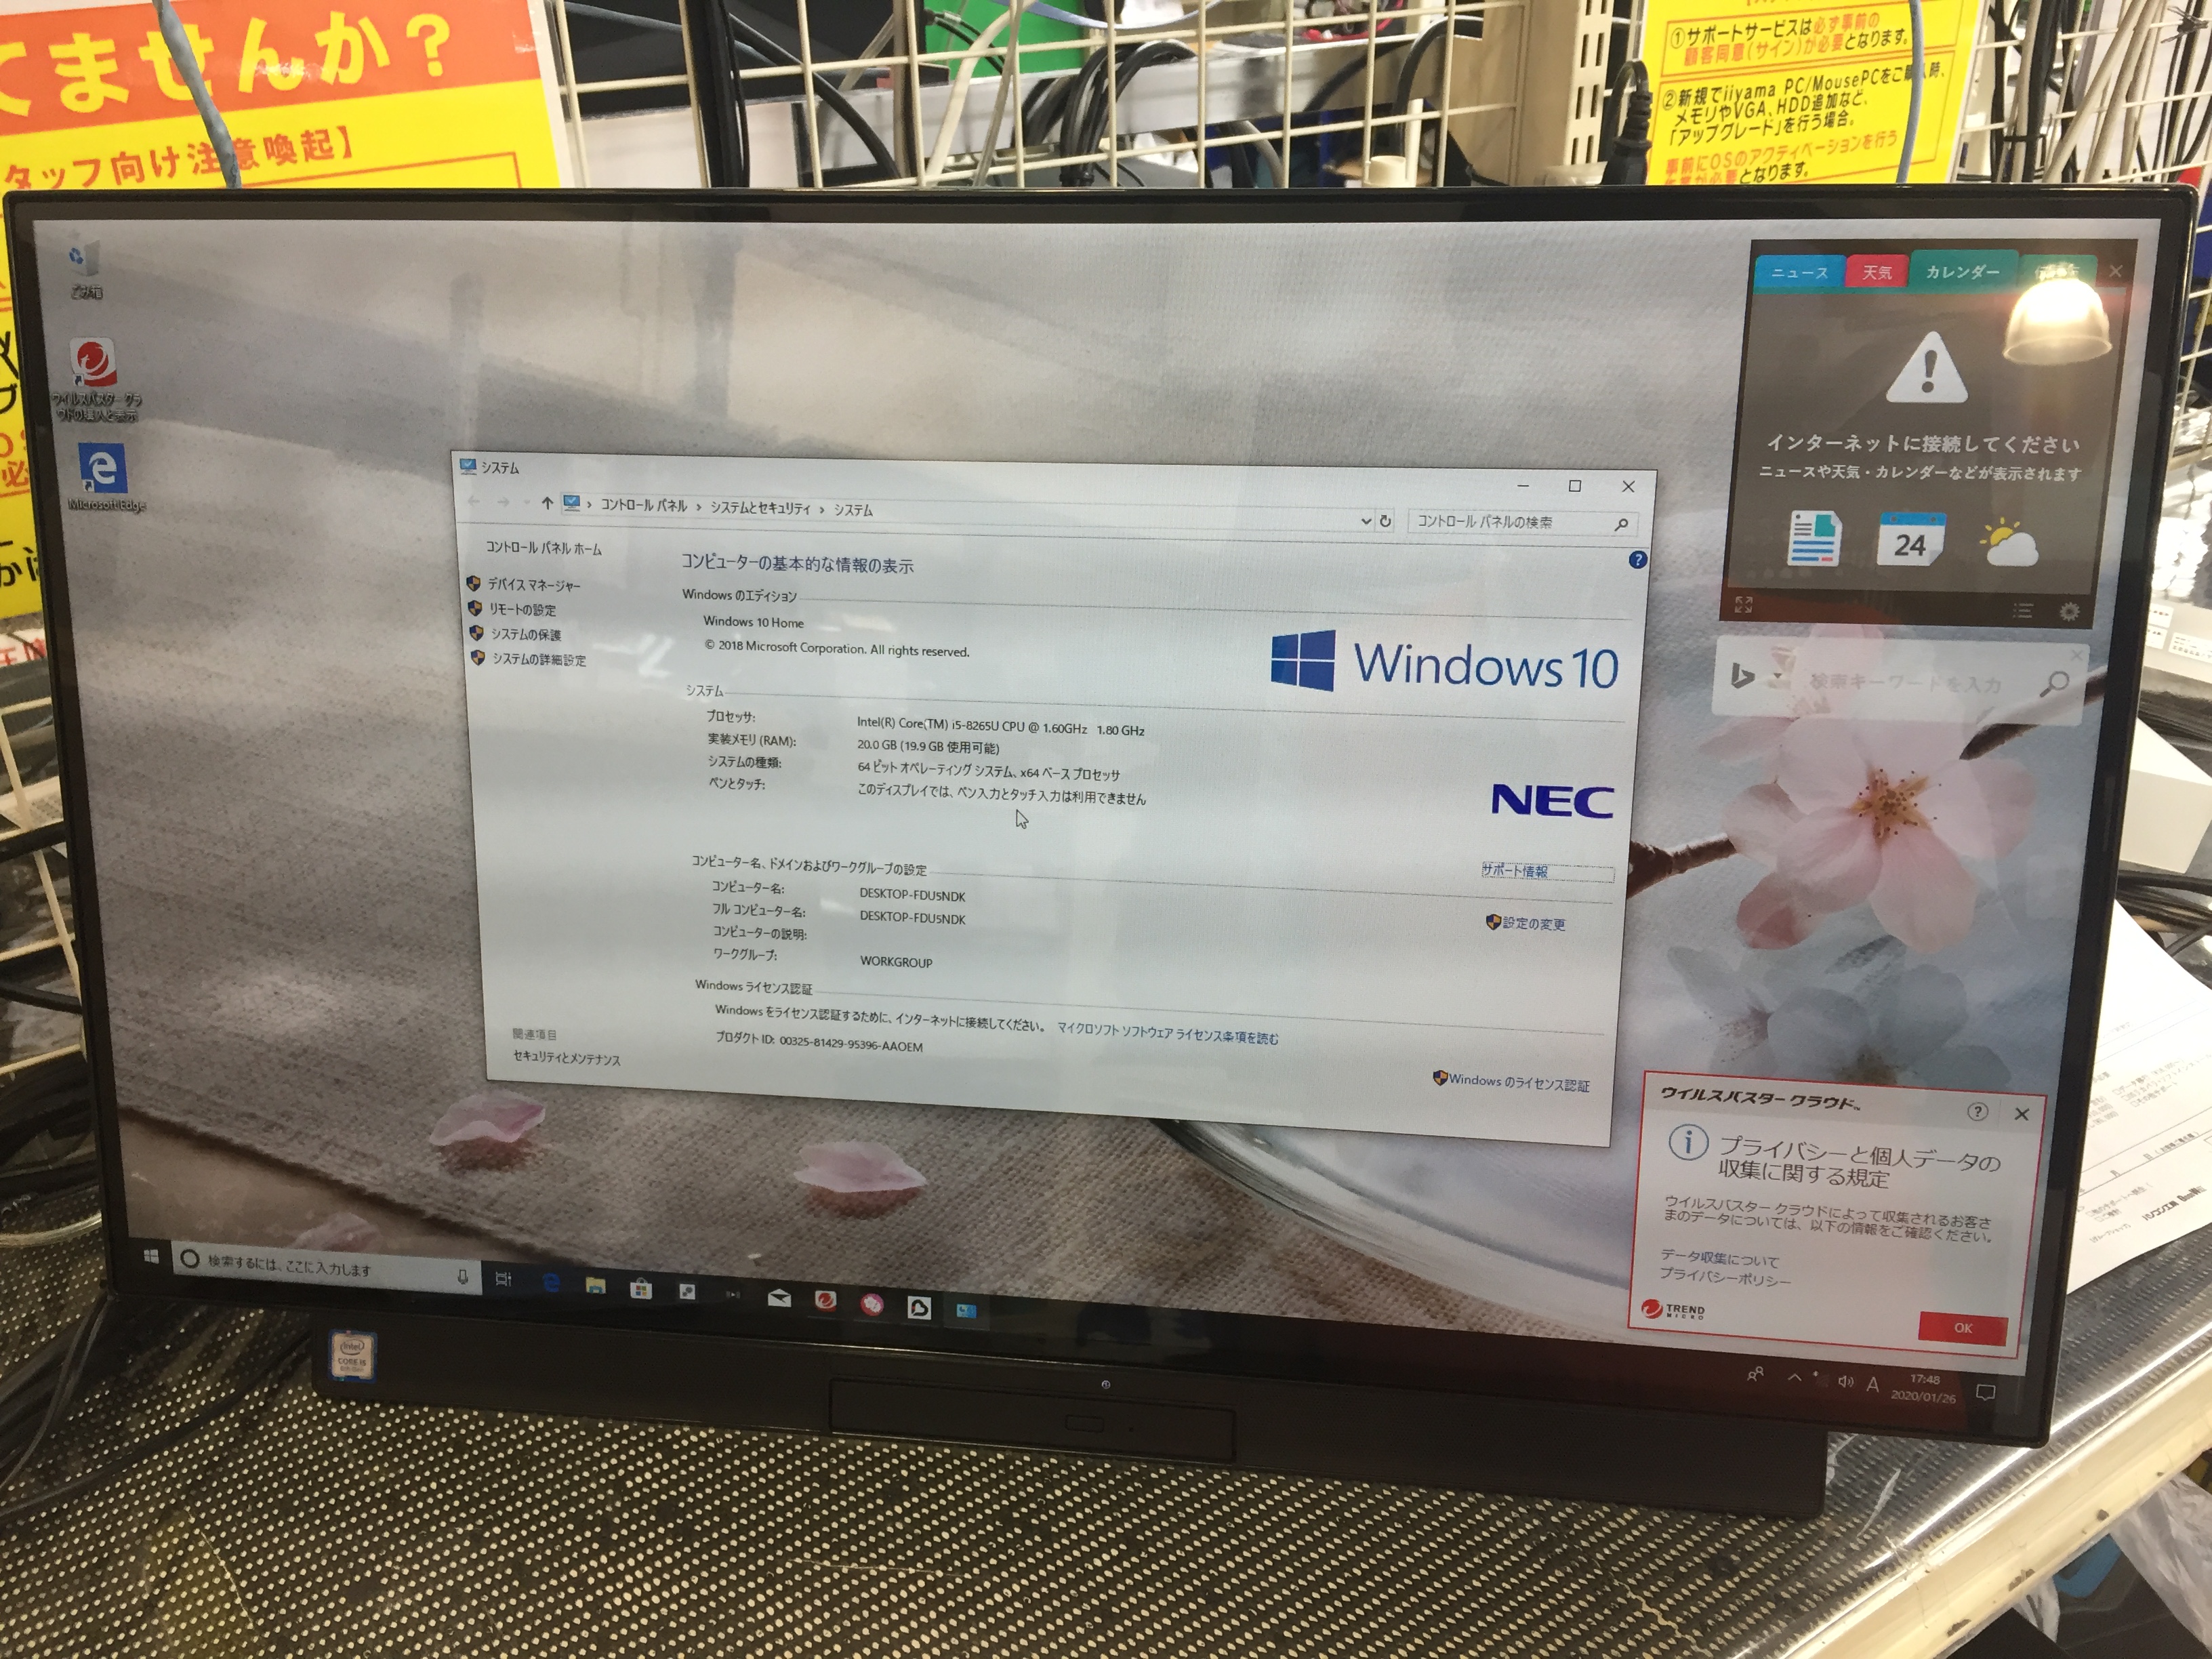 NEC LAVIE Desk All-in-one PC-DA500MAB-E3のメモリ増設サービス 